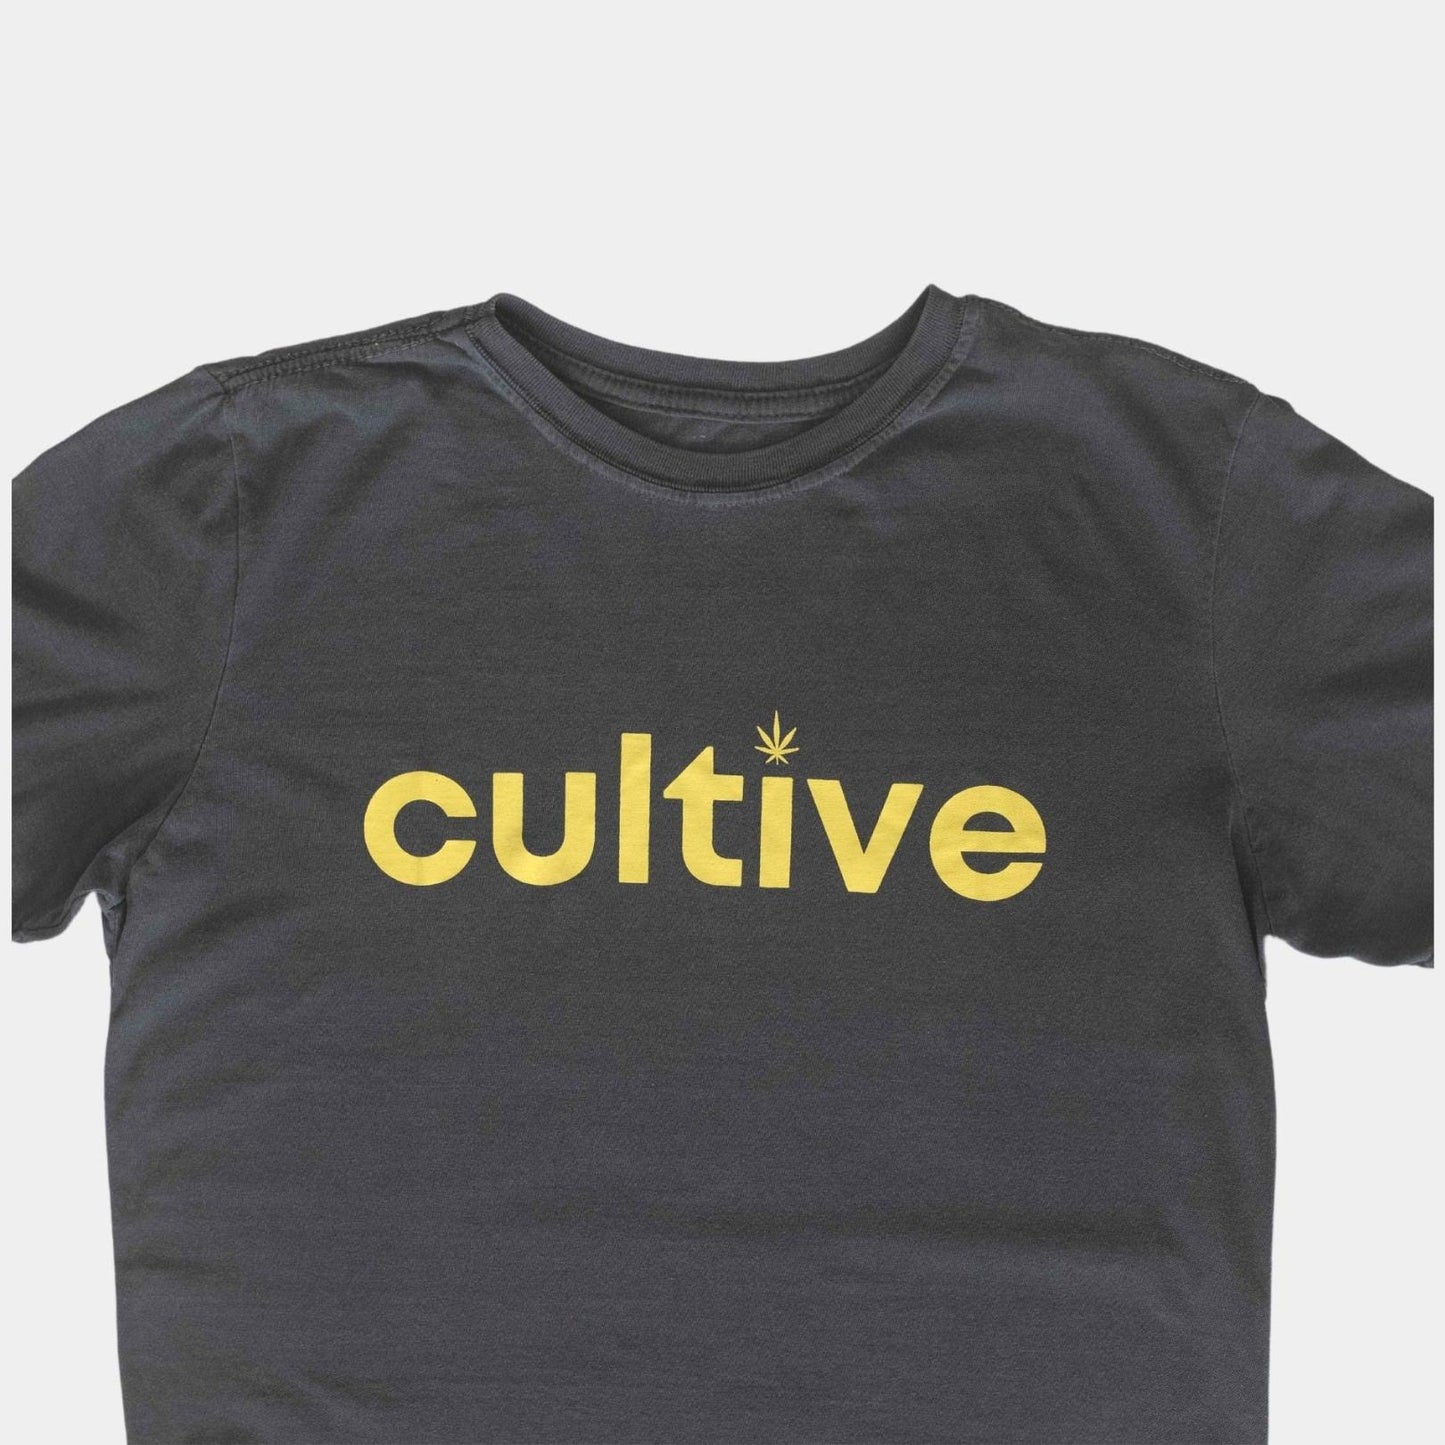 Camiseta Cultive Cinza - The Bud Bag -  Camiseta